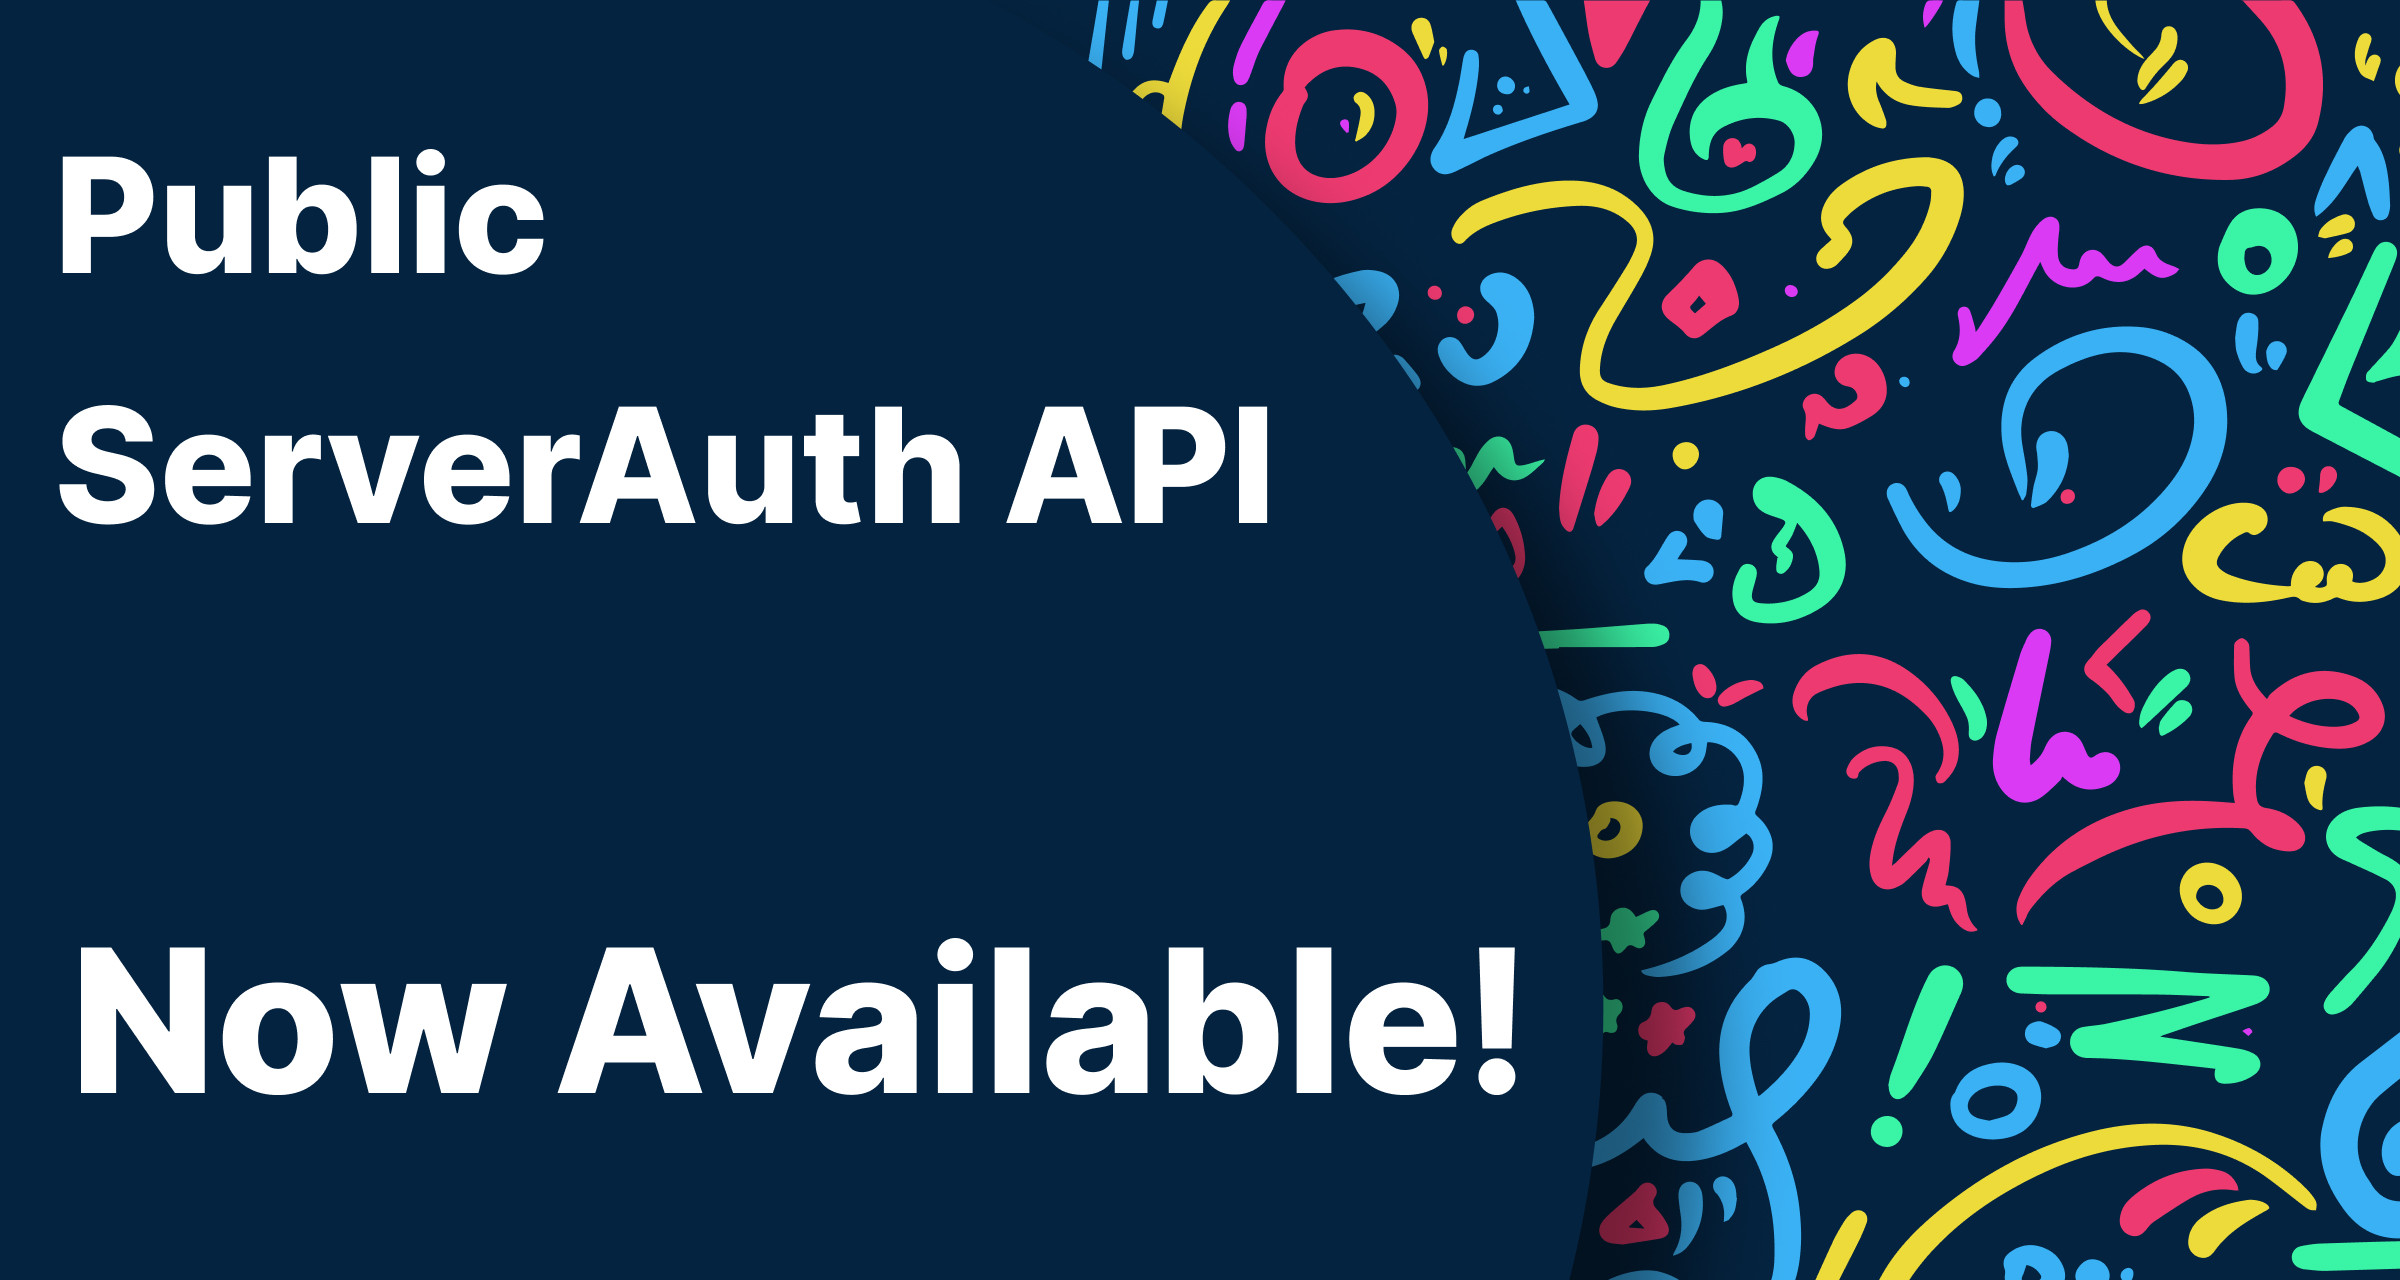 Introducing the ServerAuth API